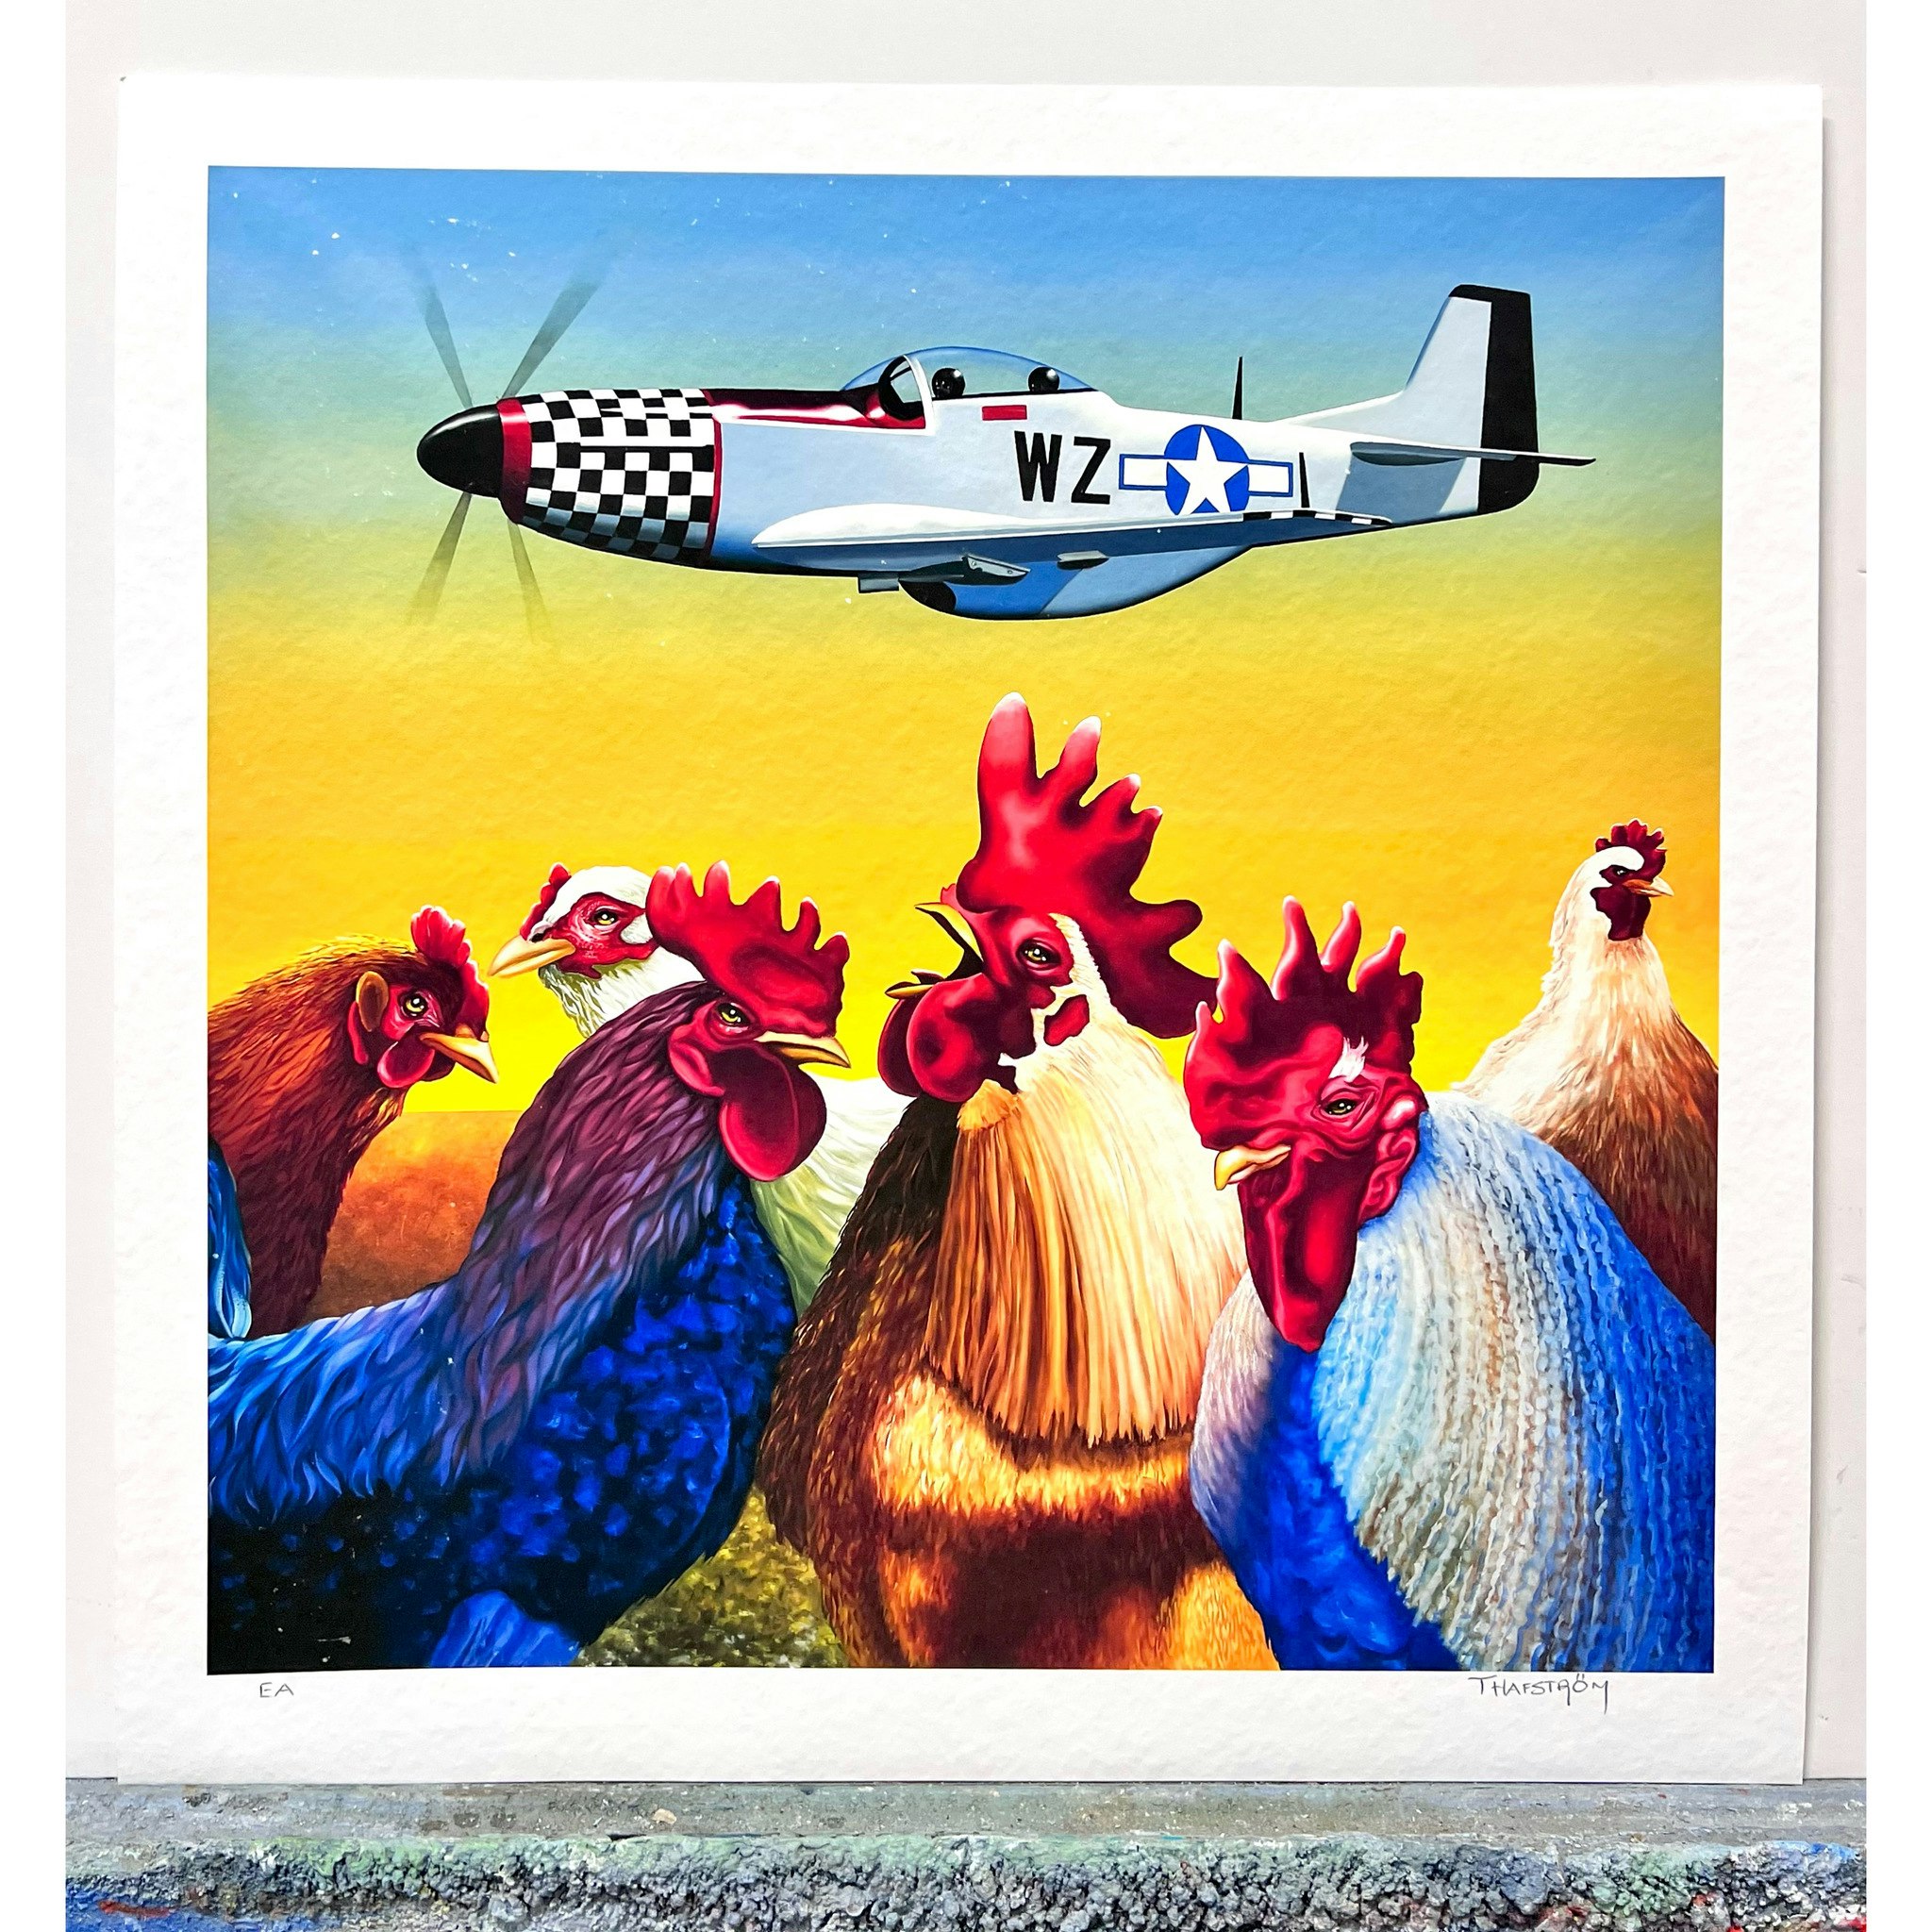 "Plane & Roosters färglitografi av Thomas Hafström, 56x56 cm.